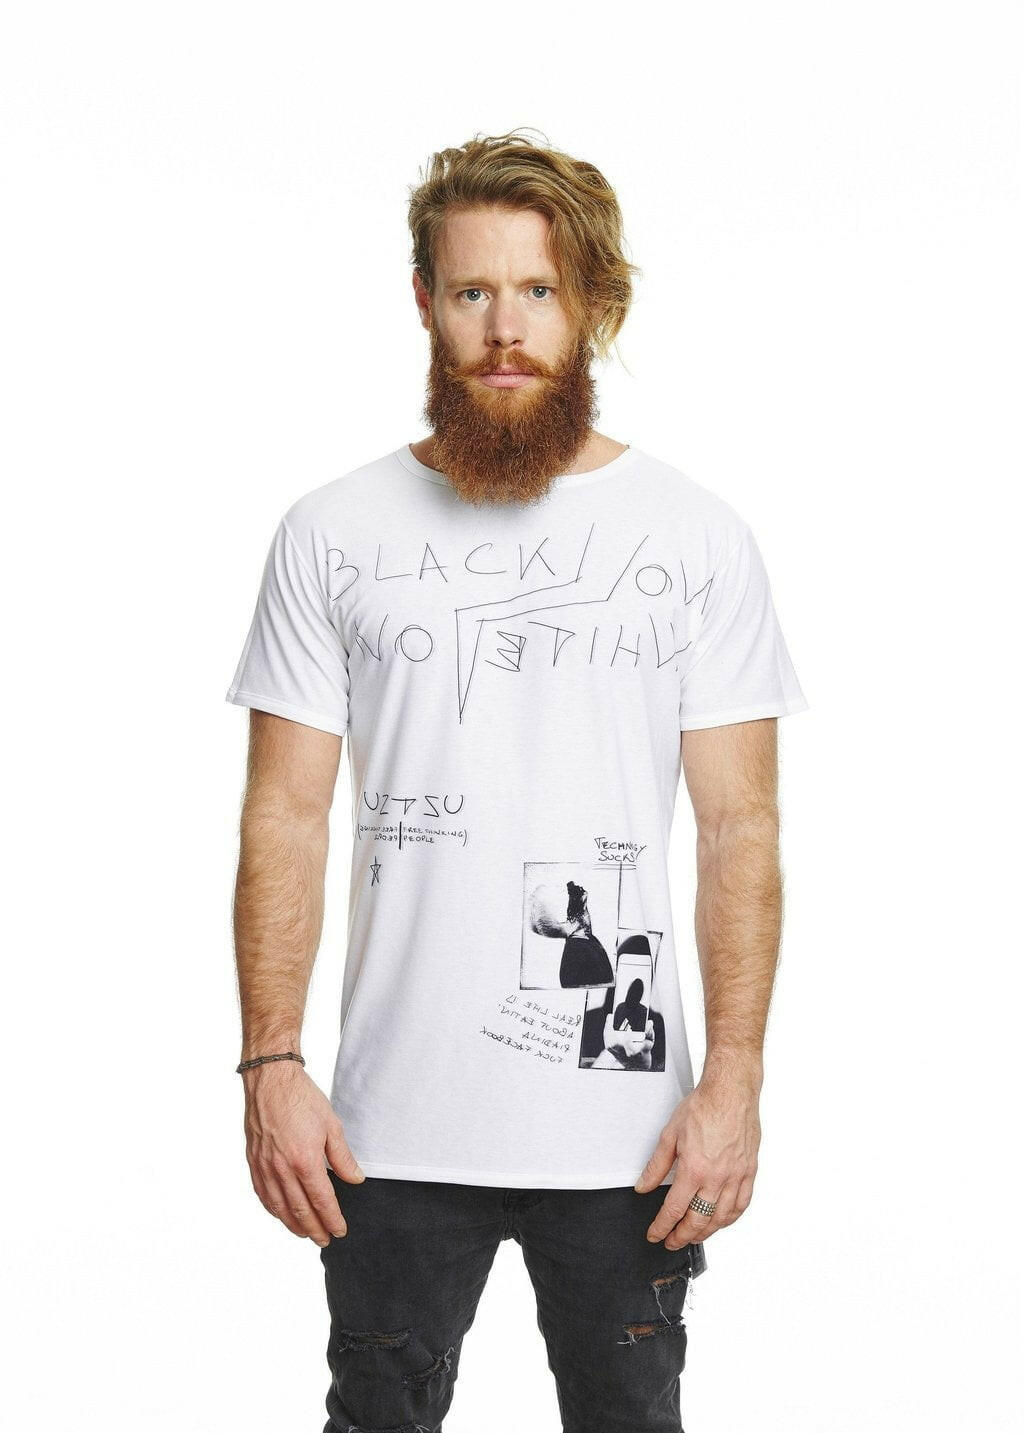 Ordinary Man - Uztzu Clothing - Shop Super 4 in 1 T-shirts, Pants and hoodies online!